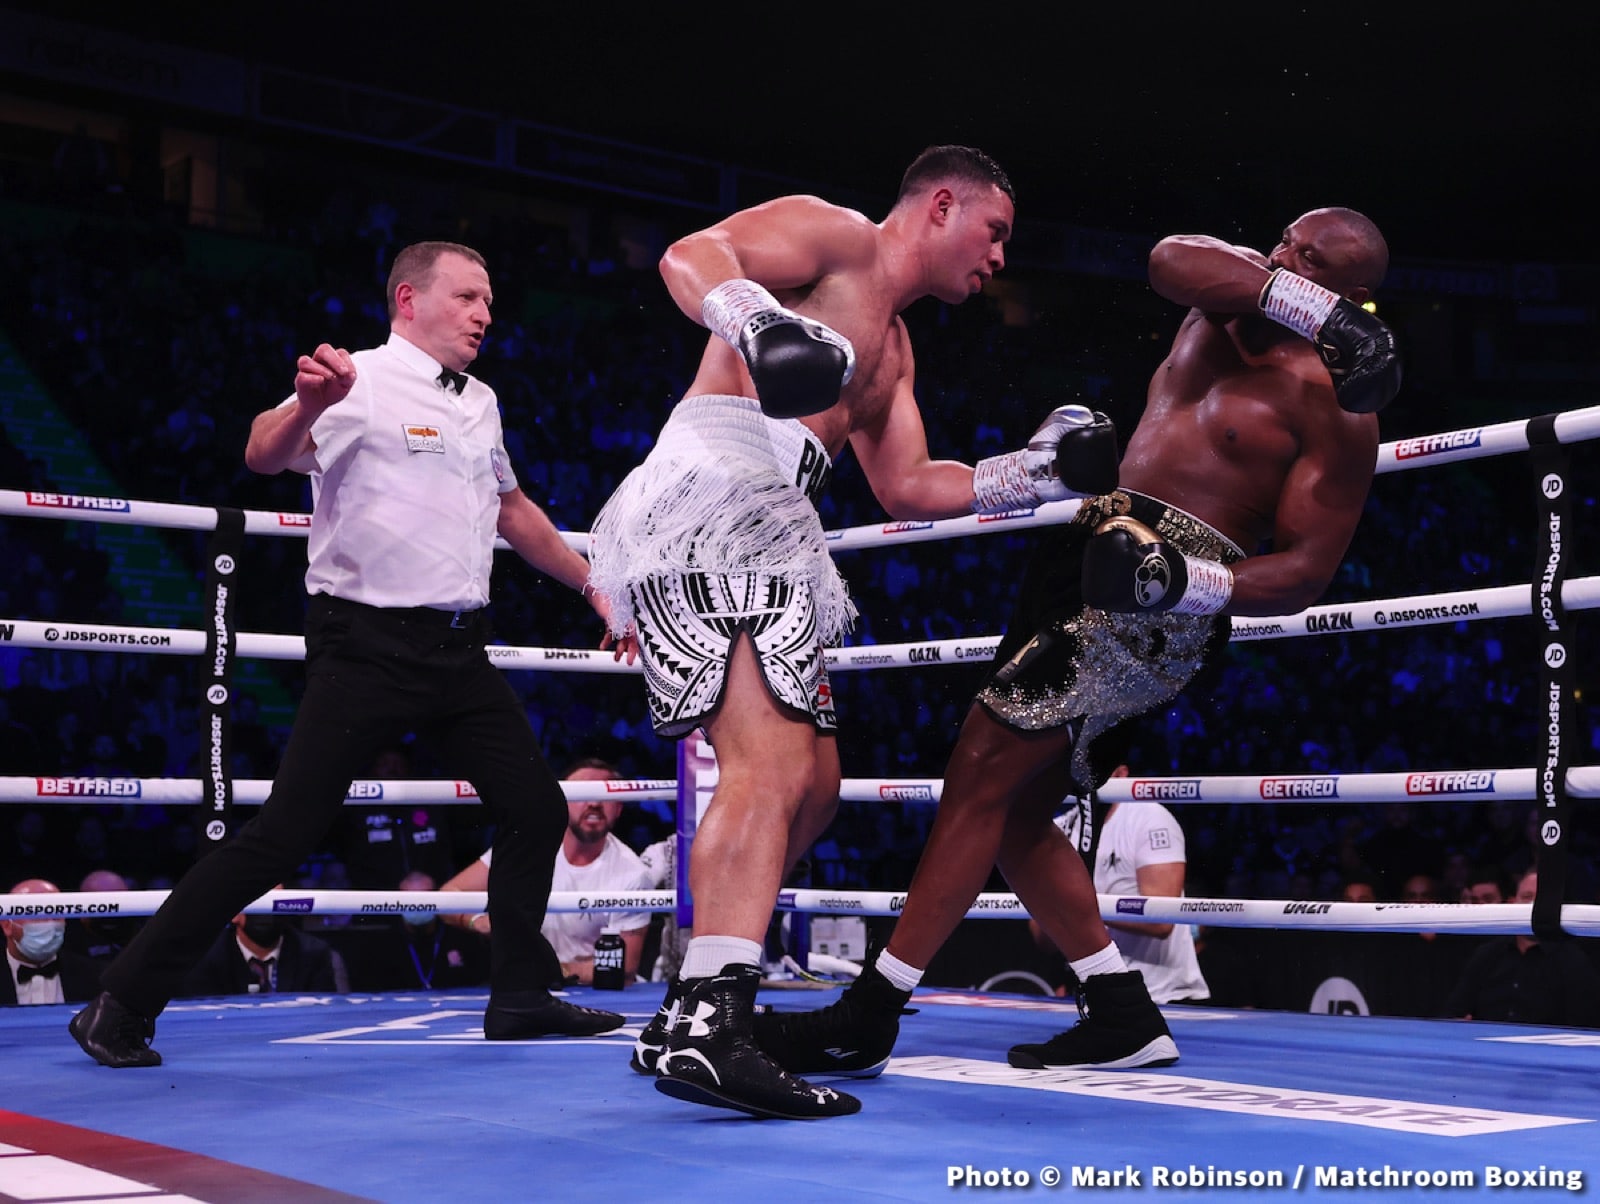 Joseph Parker boxing image / photo